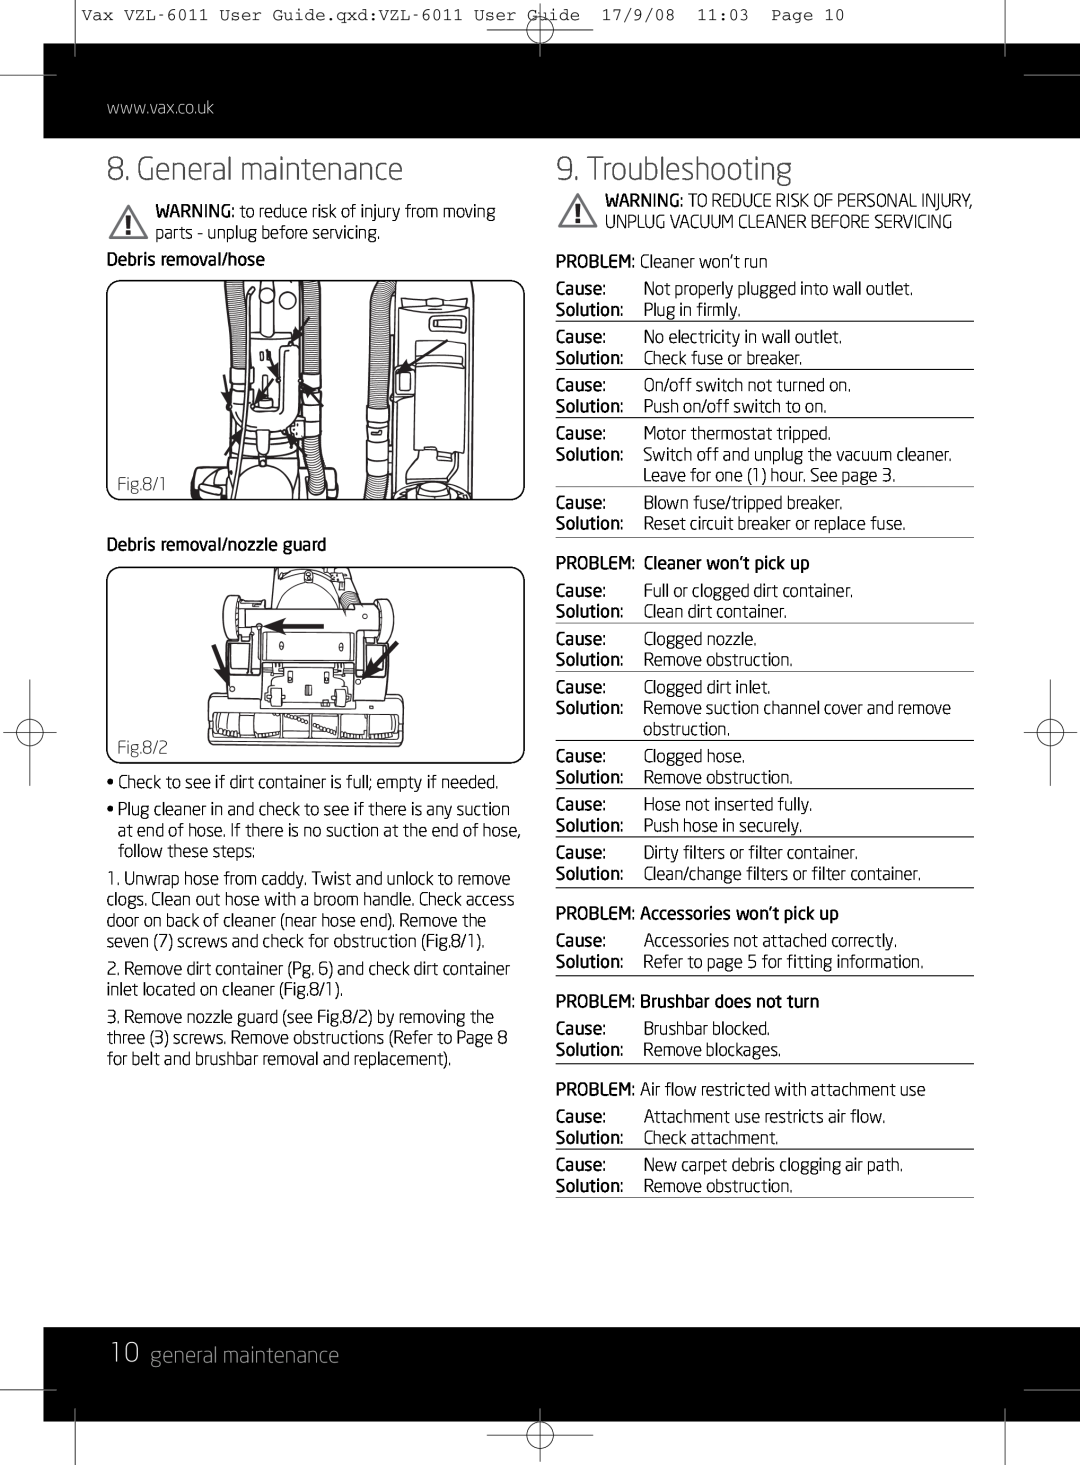 Vizio VZL-6011 instruction manual General maintenance, Troubleshooting, 10general maintenance 